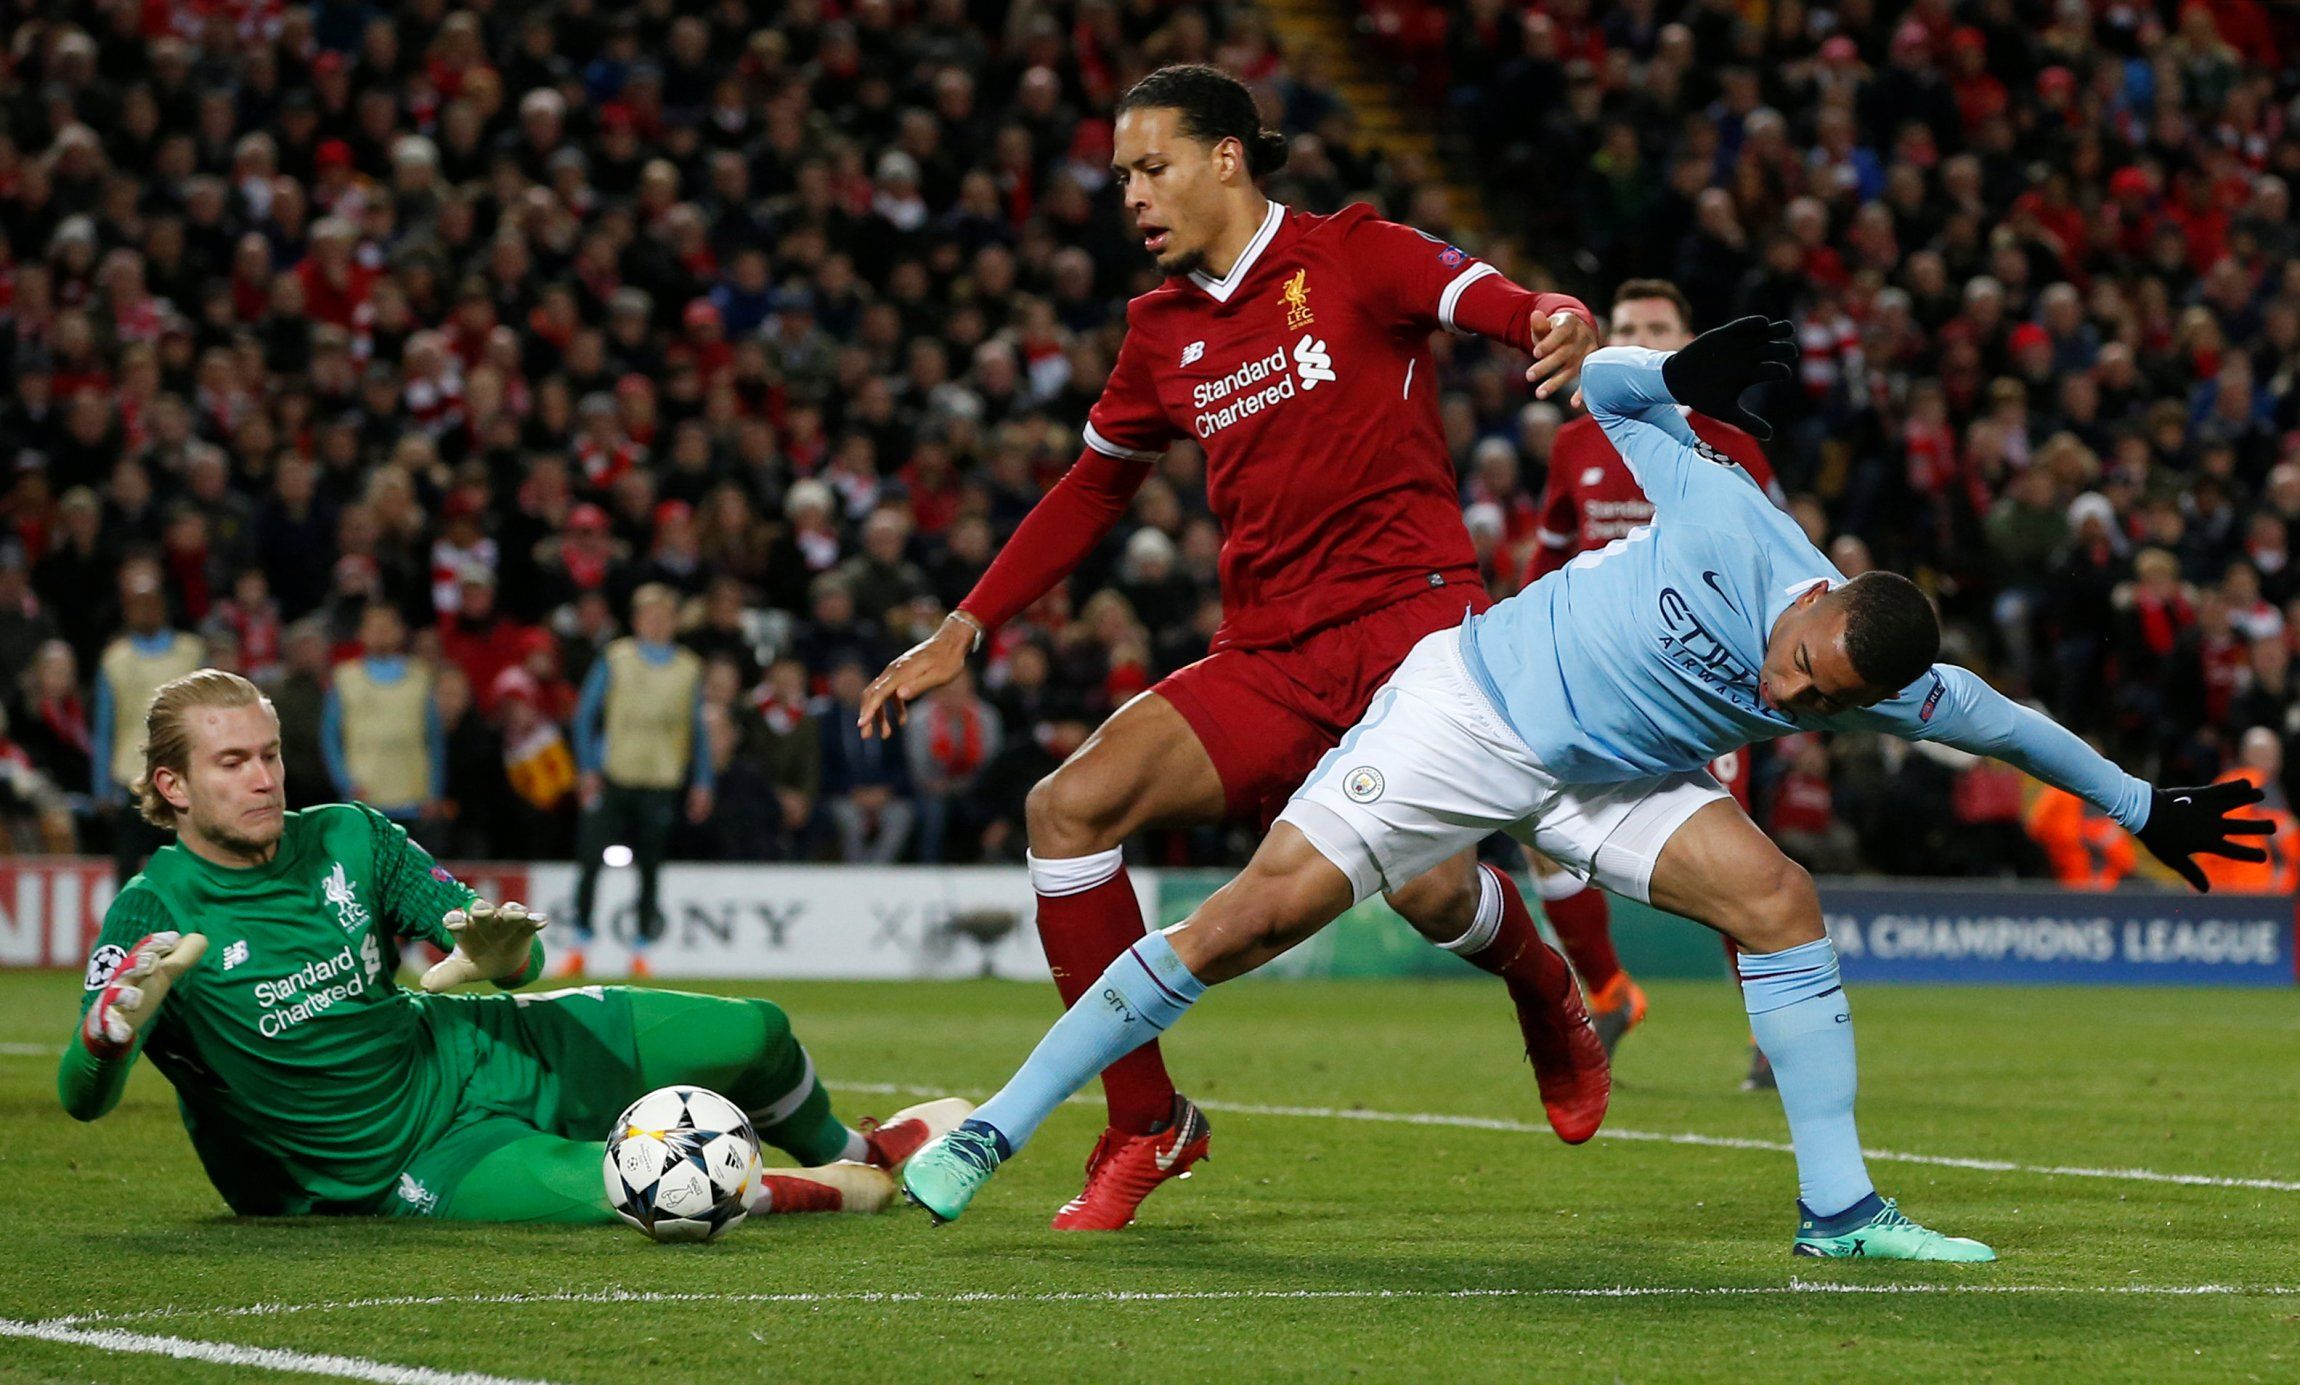 Liverpool defender Virgil van Dijk tracks Gabriel Jesus against Manchester City in the Champions League